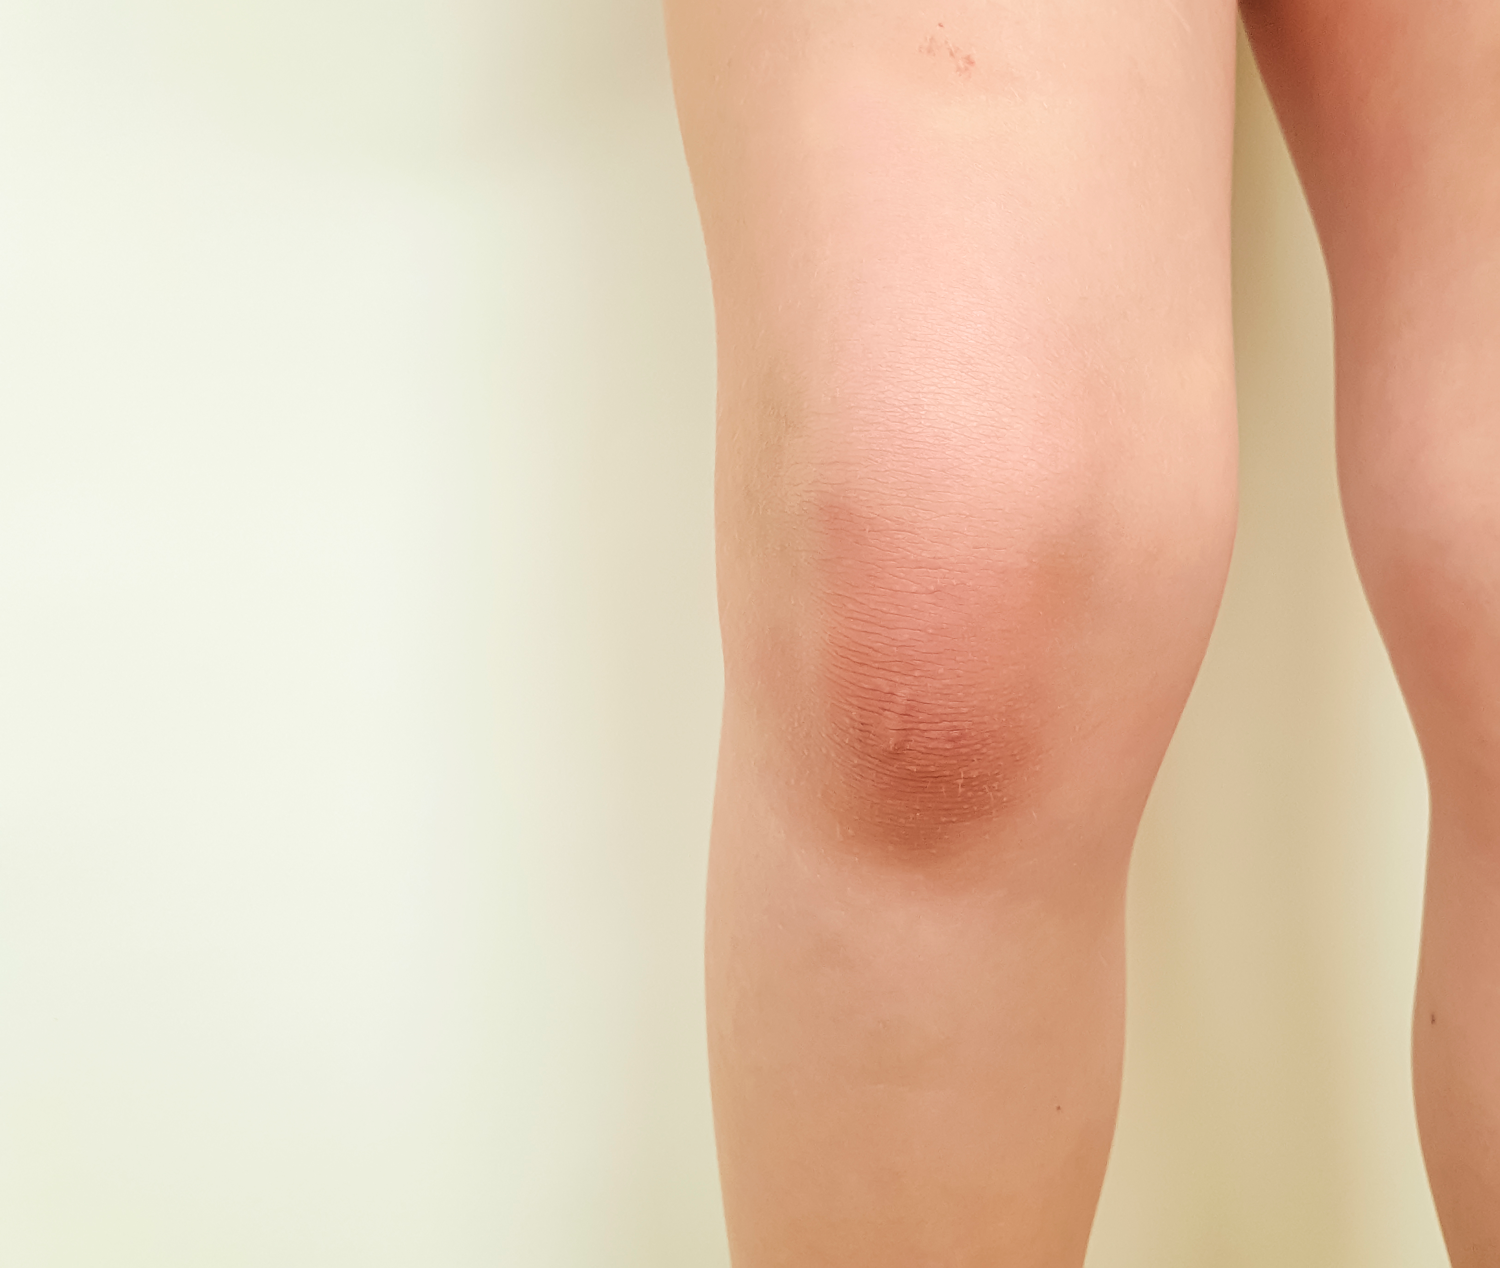 Can Plantar Fasciitis Cause Knee Pain? - ePodiatrists